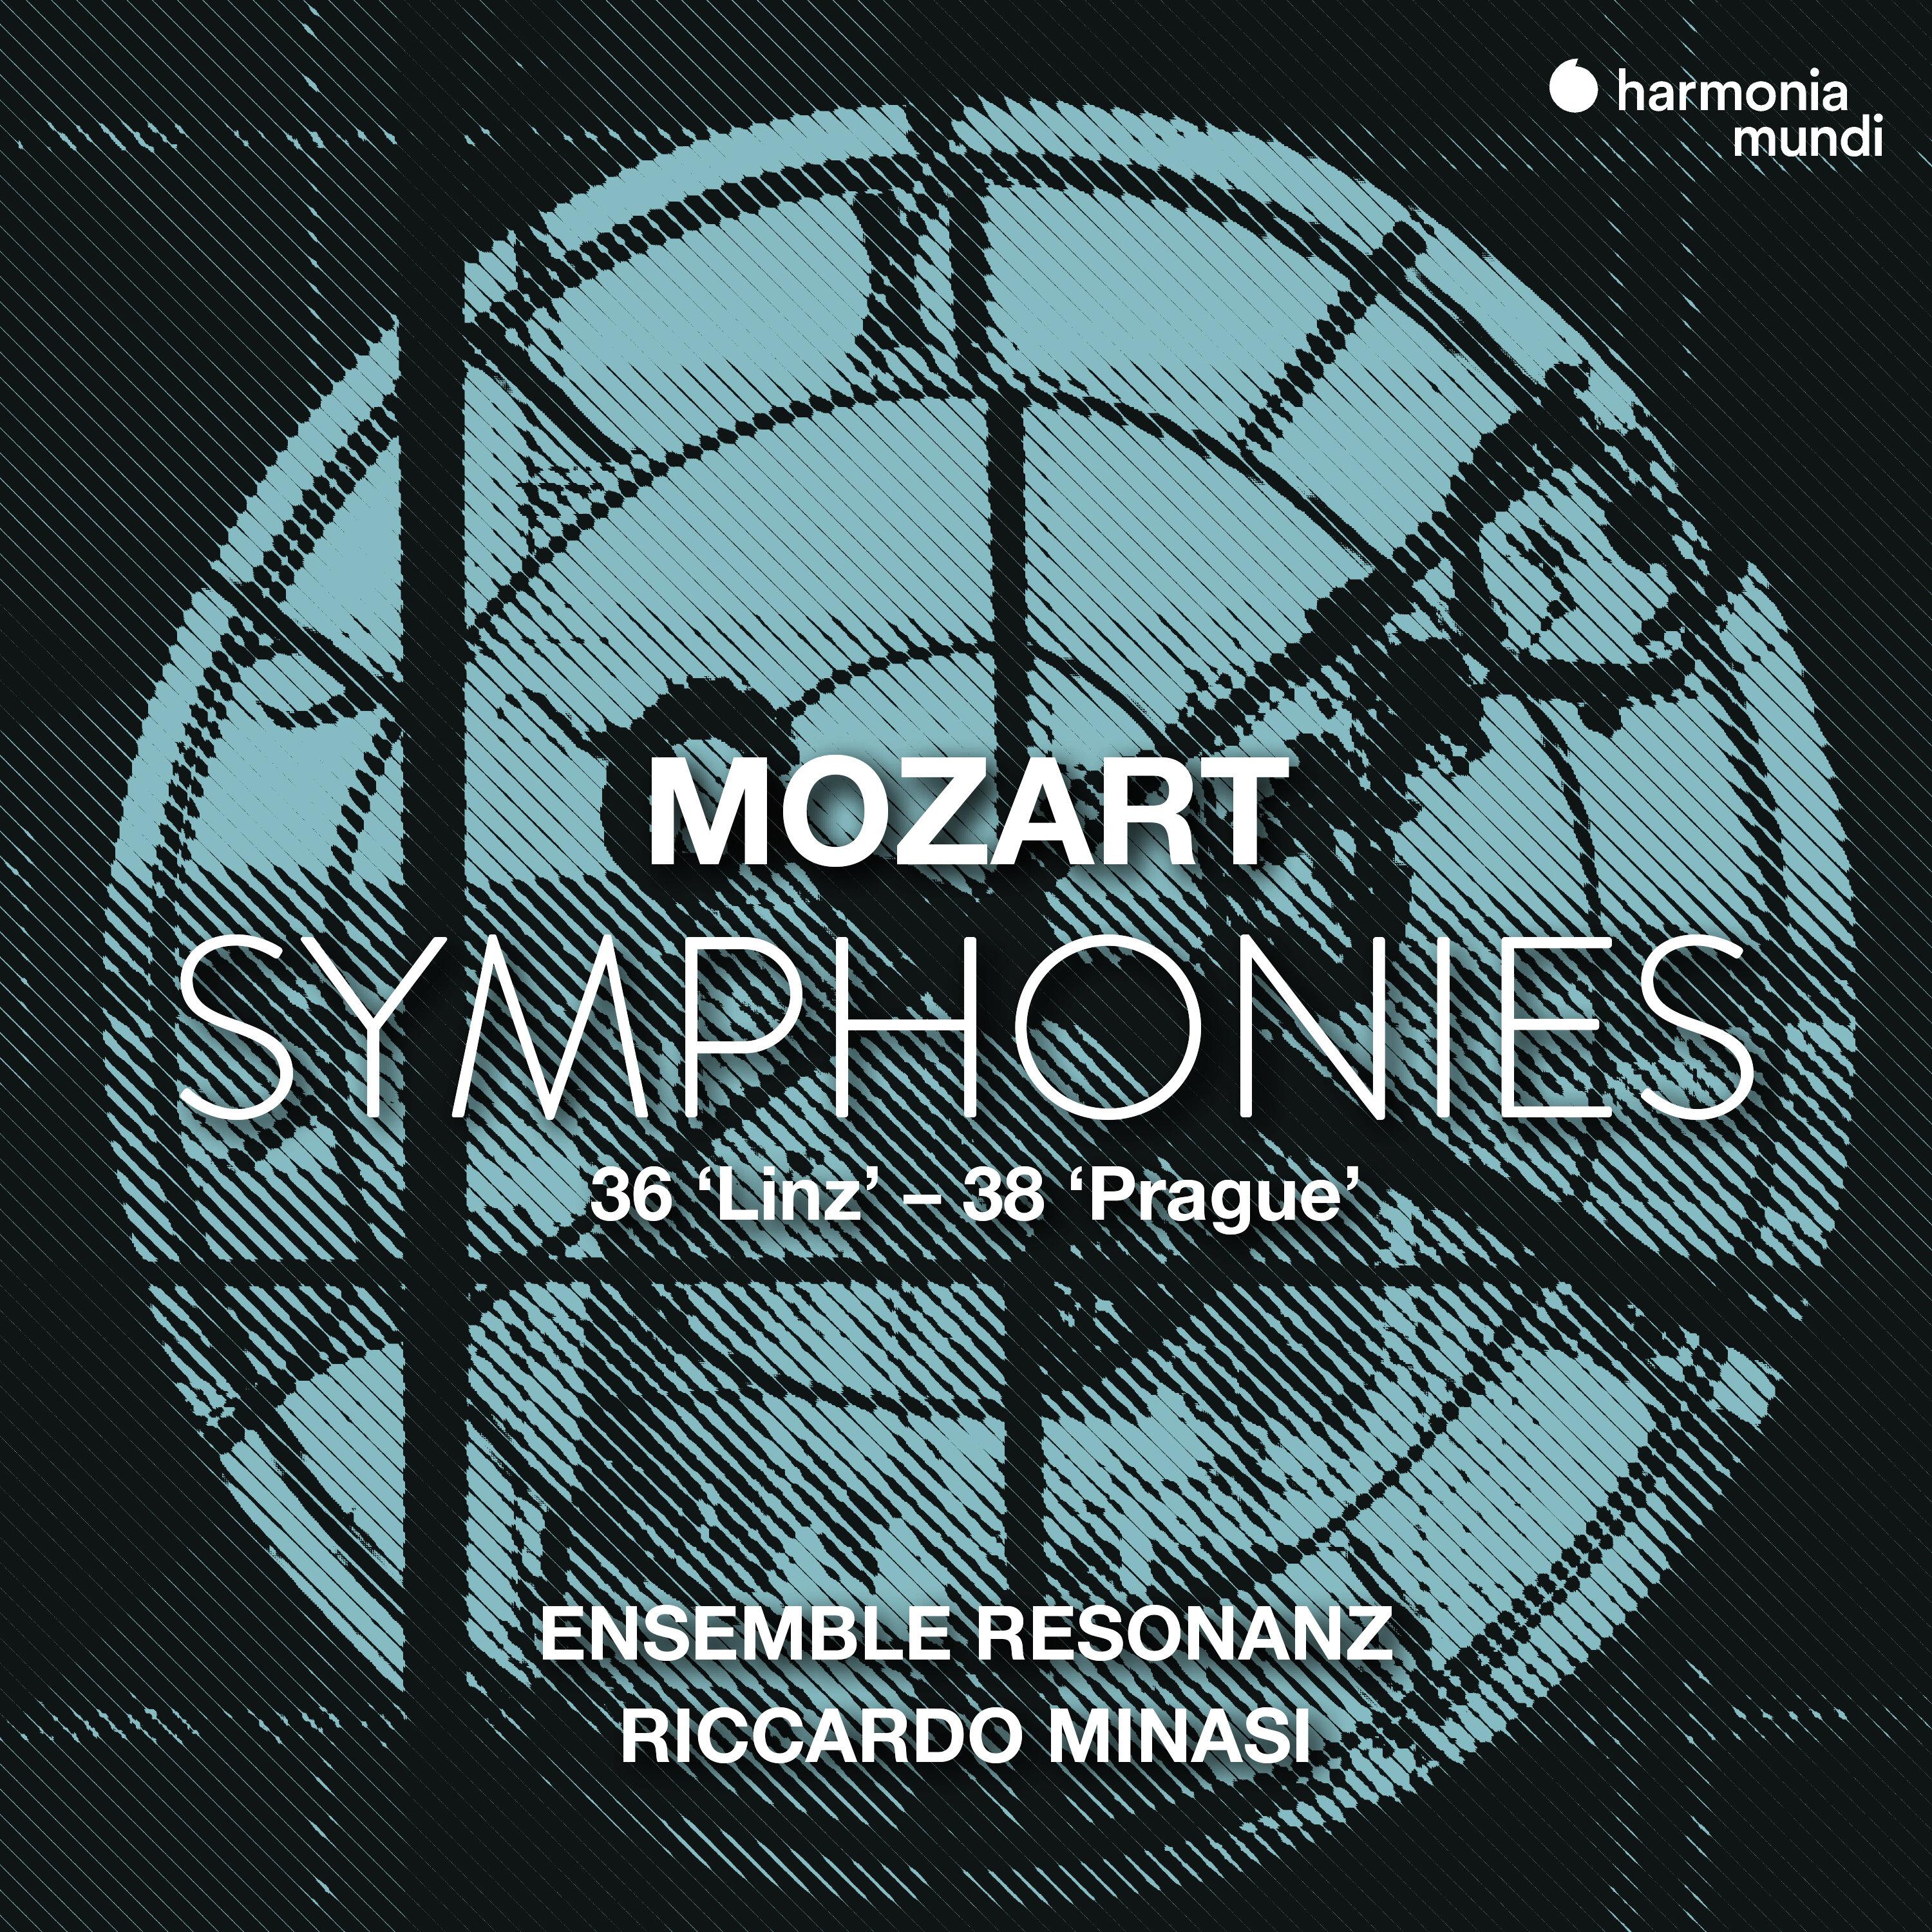 Ensemble Resonanz - Symphony No. 36 in C major, K. 425 